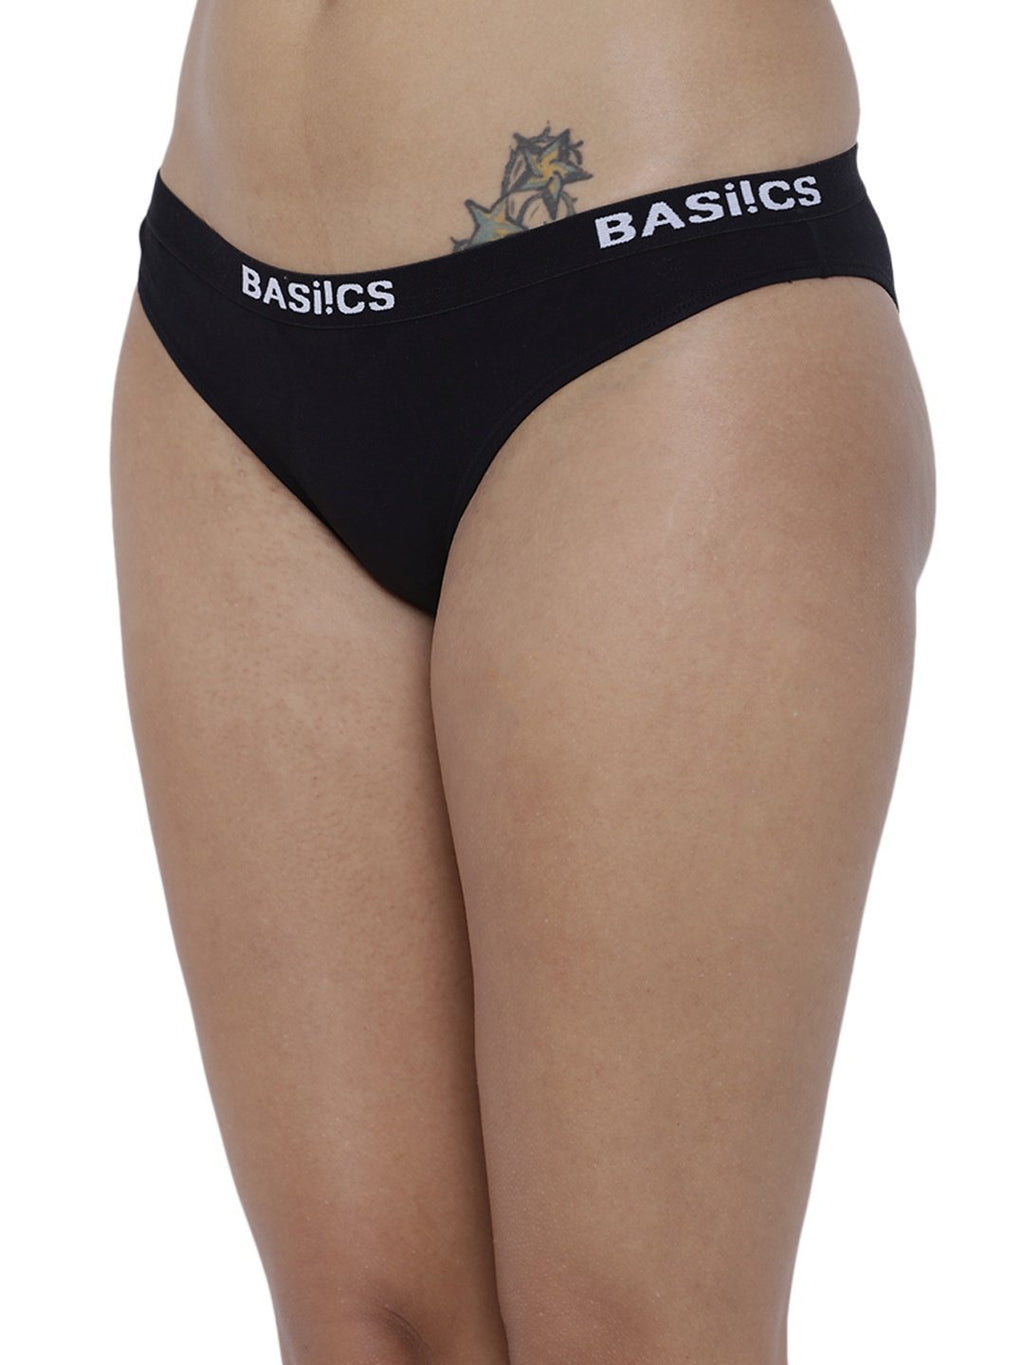 BASIICS Female Black Dulce Candy Brief Panty